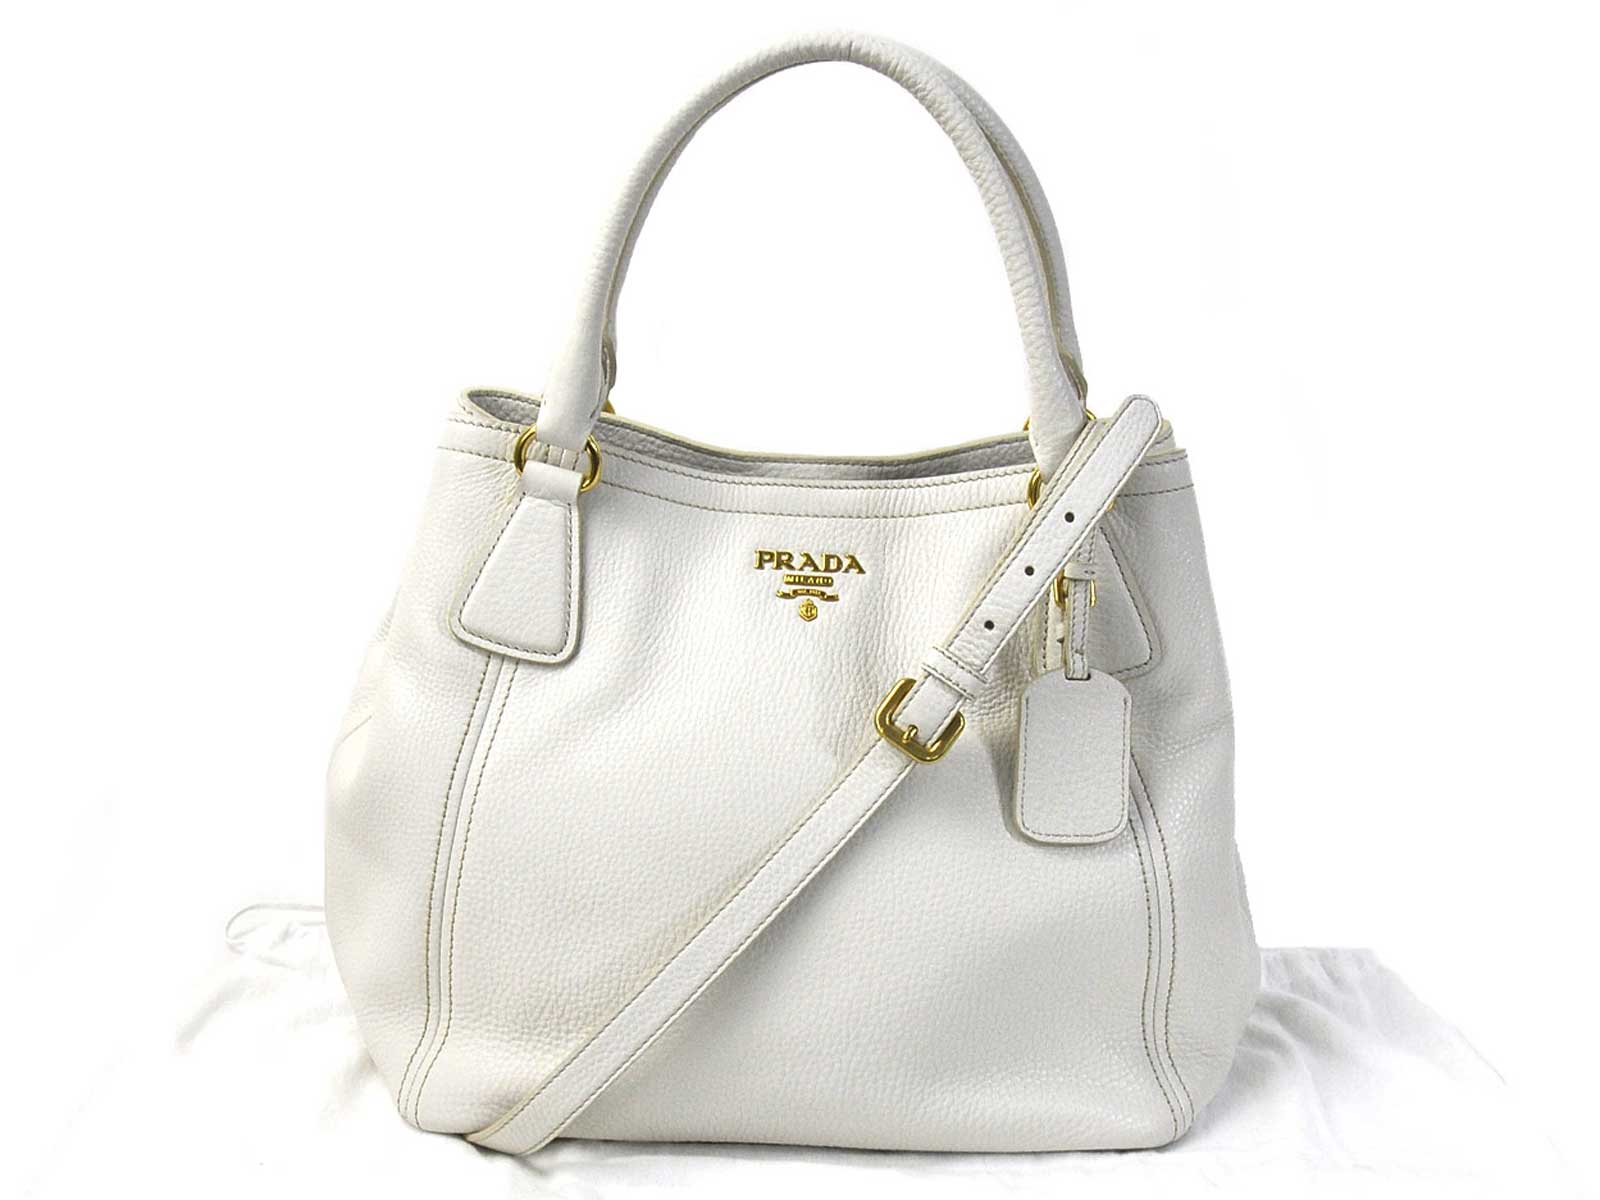 Auth PRADA 2-Way Handbag Shoulder Bag White Leather/Goldtone - 93883 | eBay